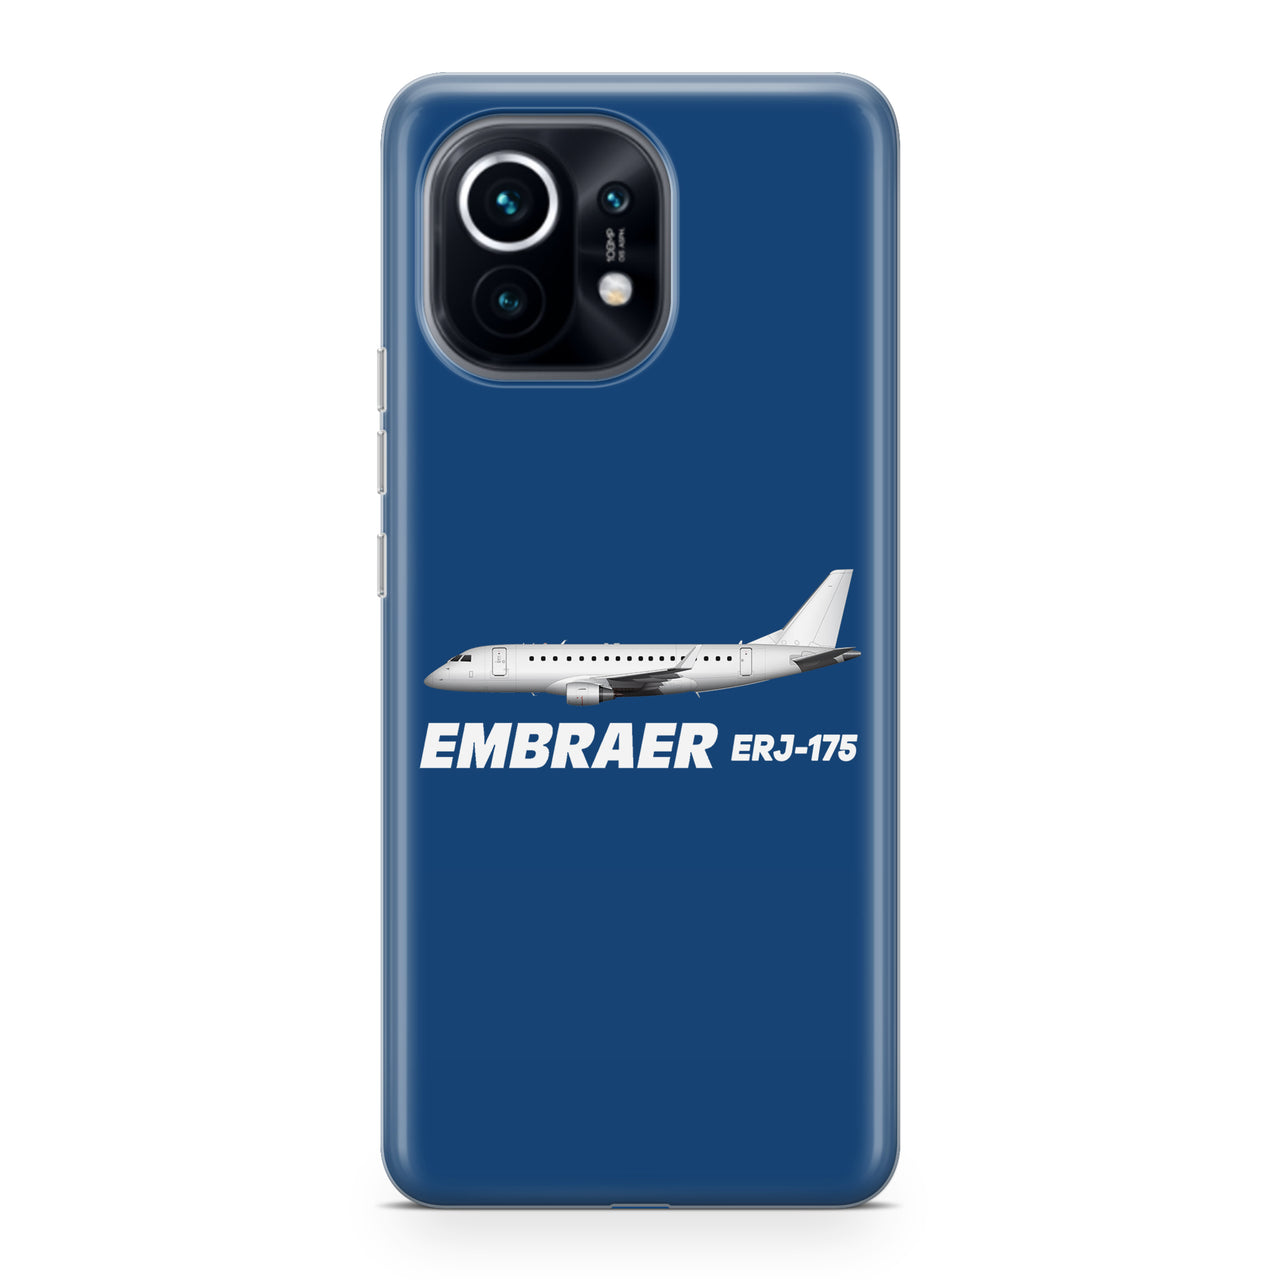 The Embraer ERJ-175 Designed Xiaomi Cases